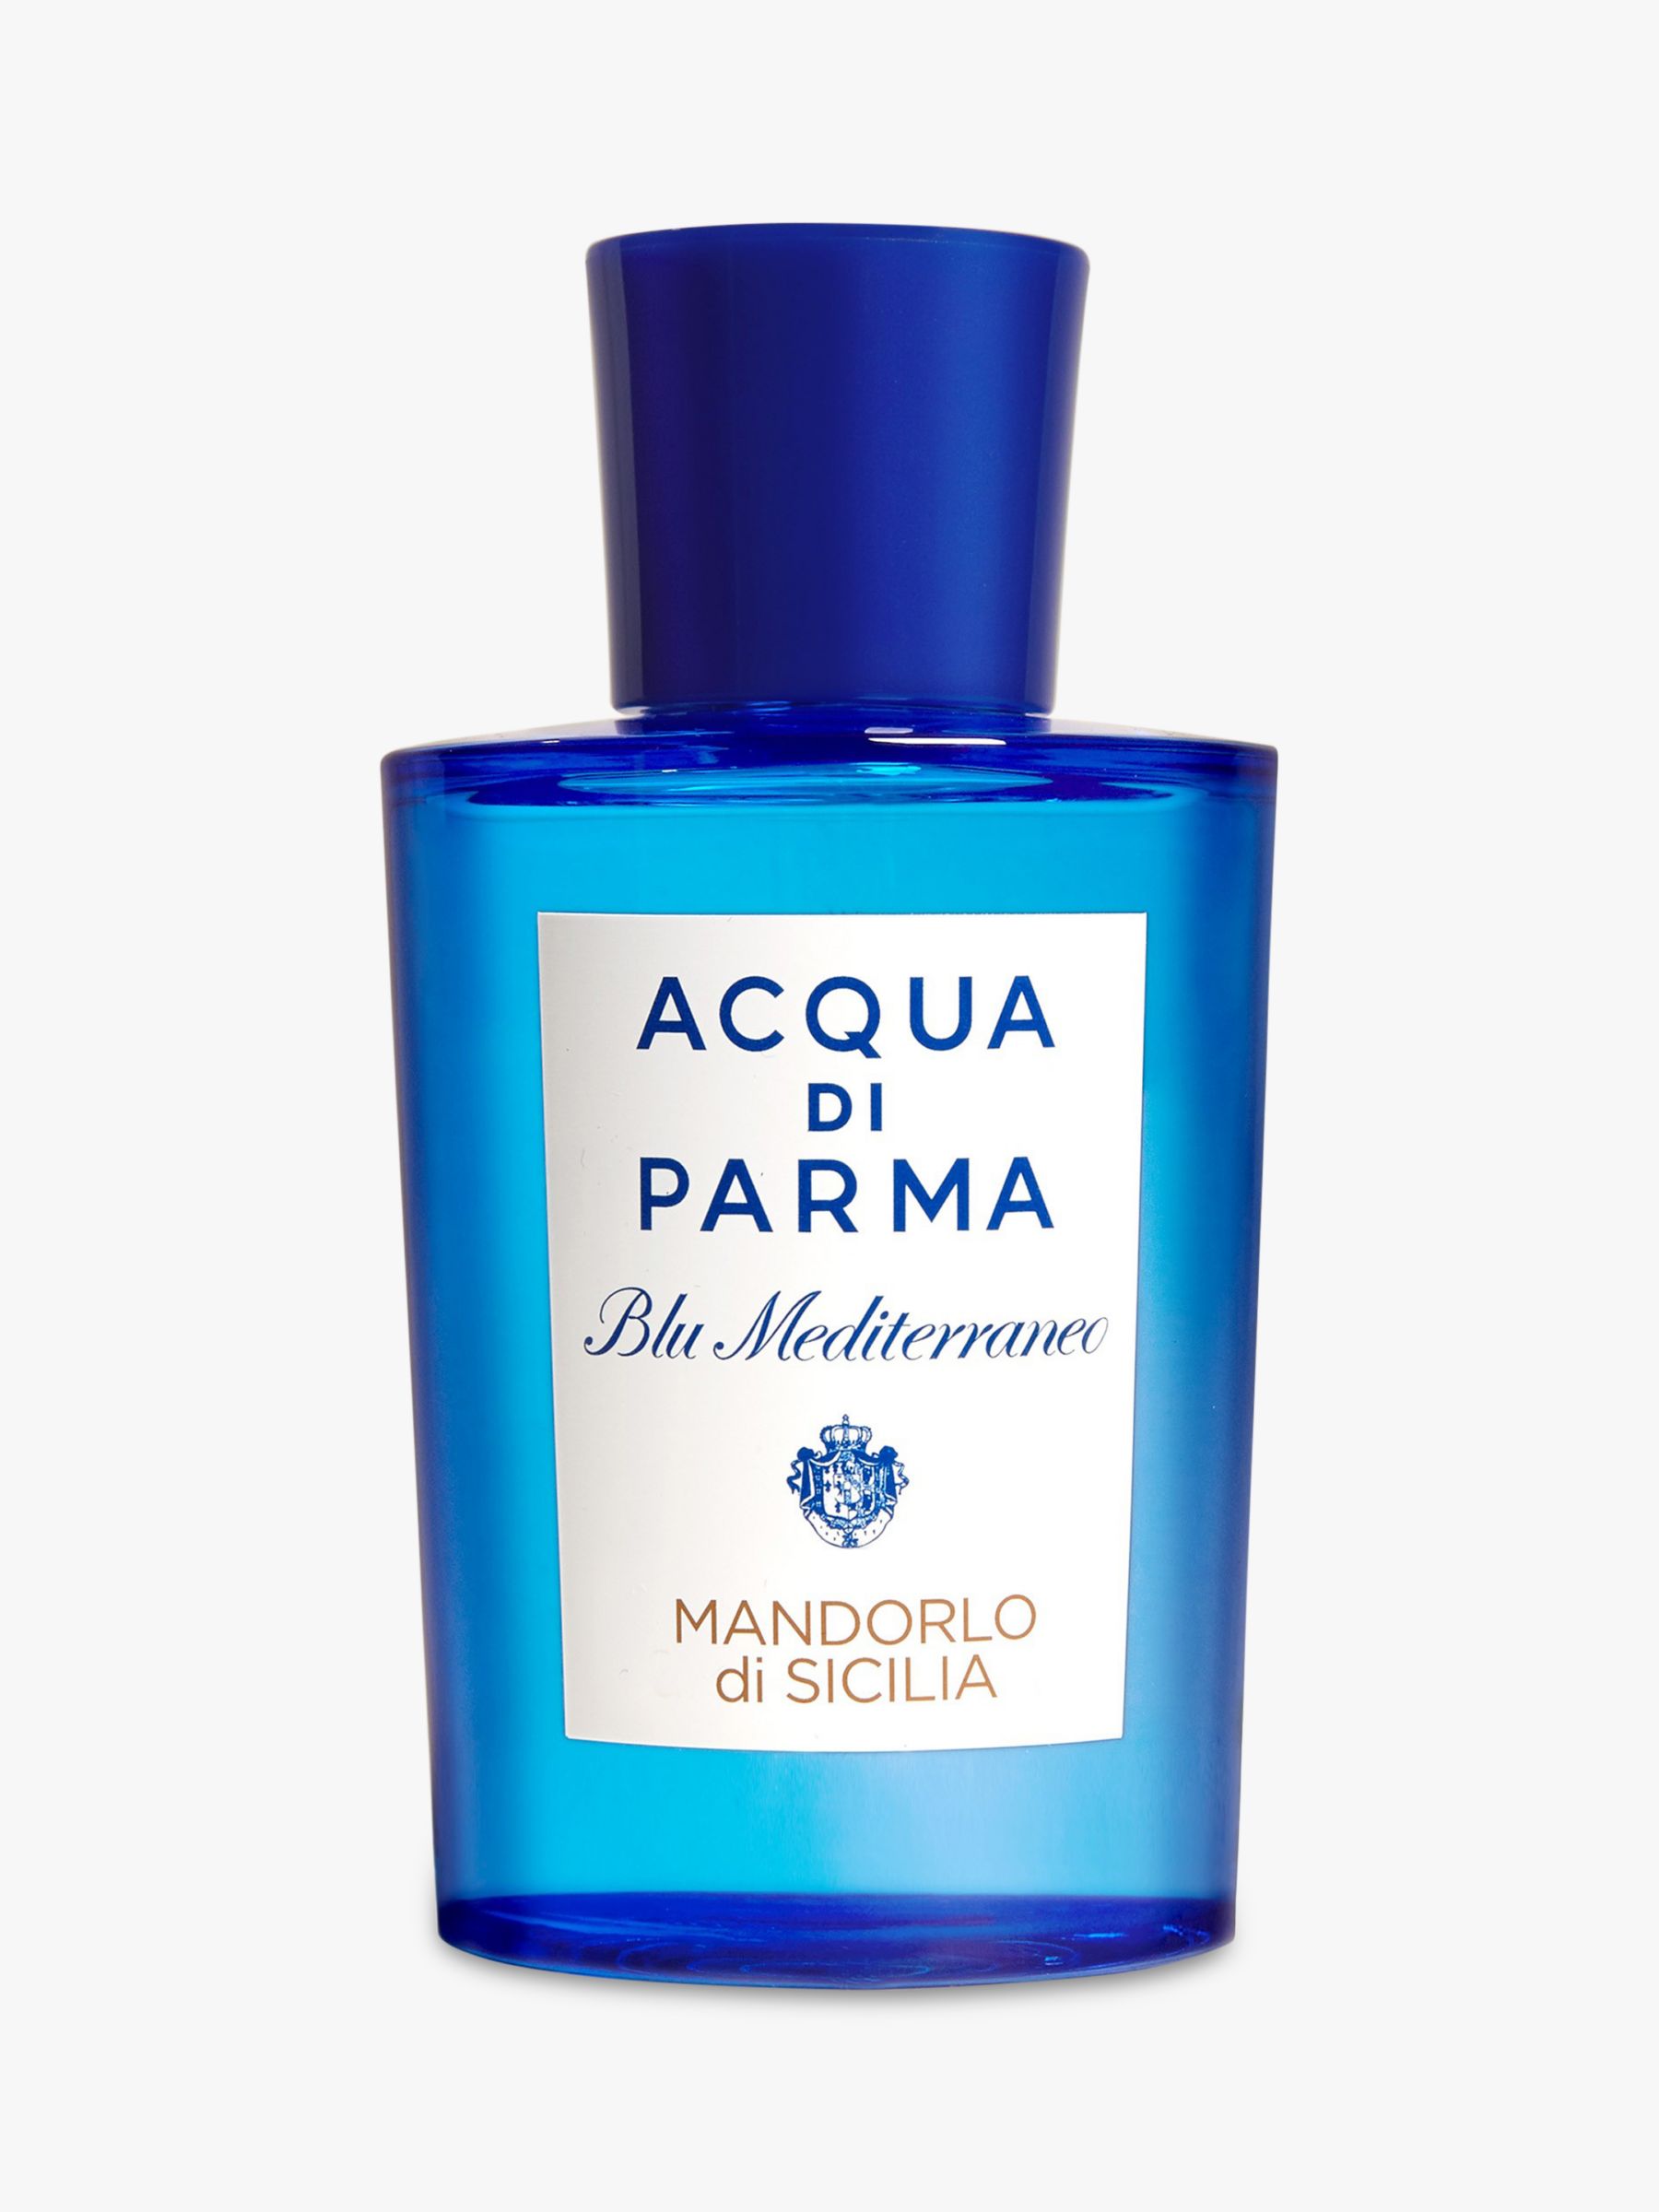 Acqua Di Parma Blu Mediterraneo Mandorlo Di Sicilia Eau De Toilette Spray 150ml At John Lewis